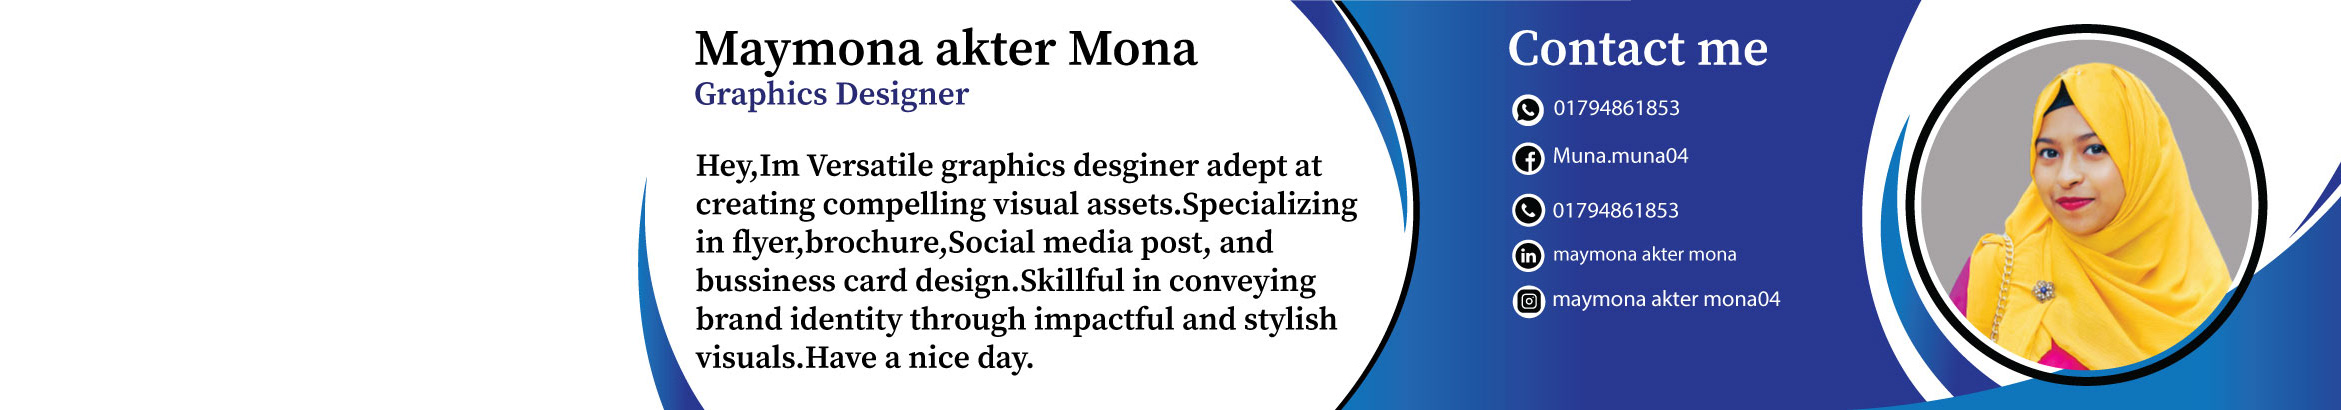 Maymona Akter Mona's profile banner